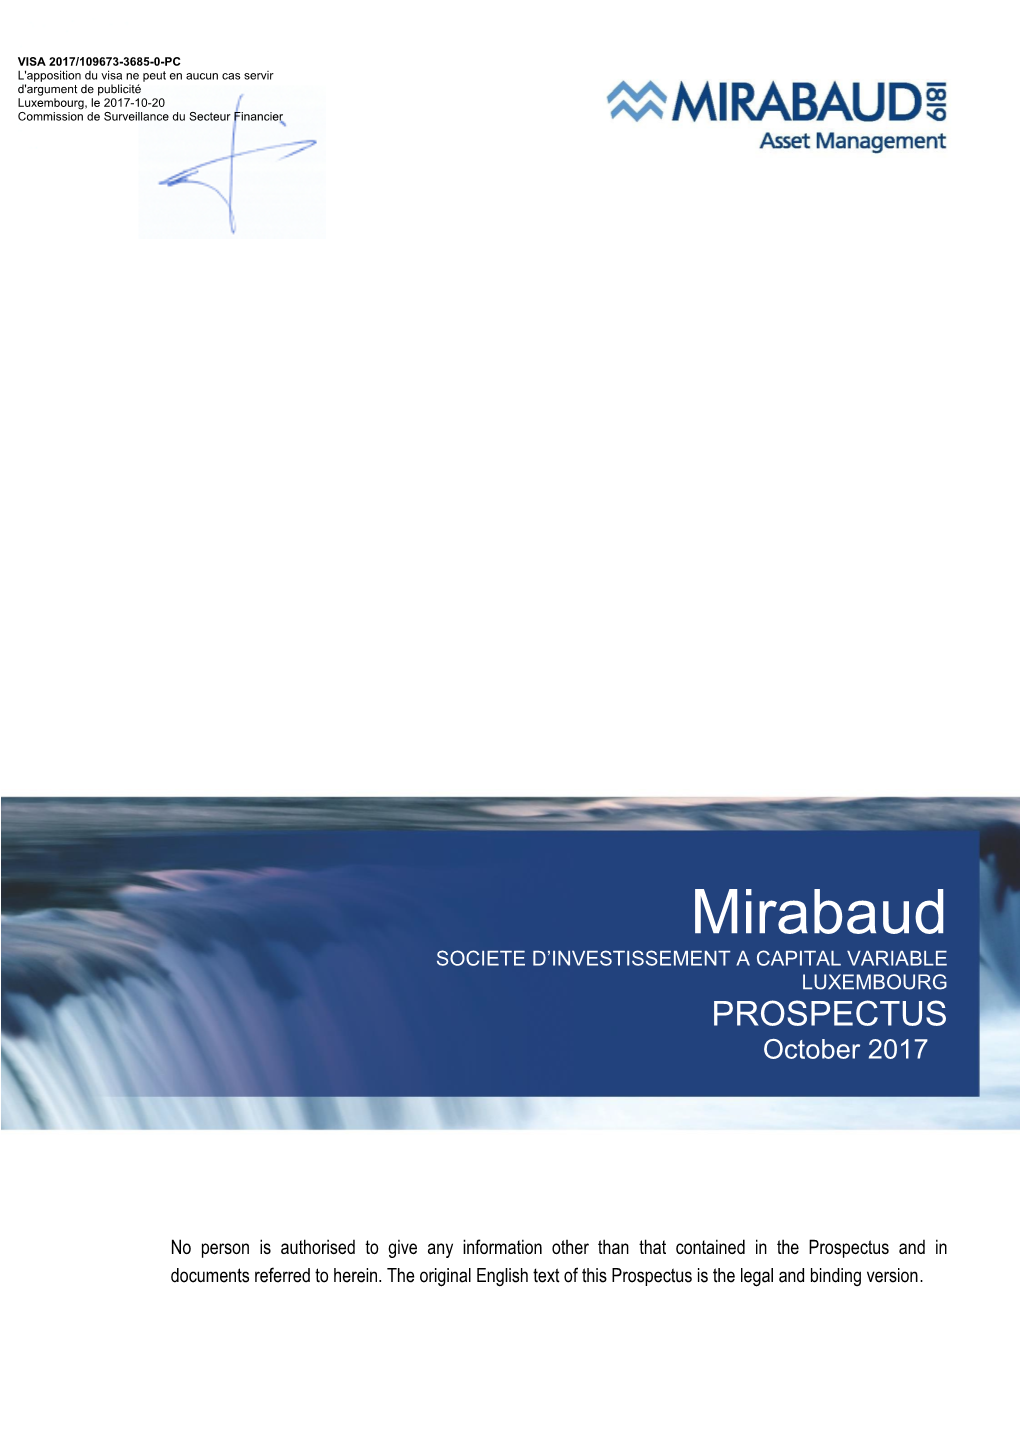 Mirabaud SOCIETE D’INVESTISSEMENT a CAPITAL VARIABLE LUXEMBOURG PROSPECTUS October 2017